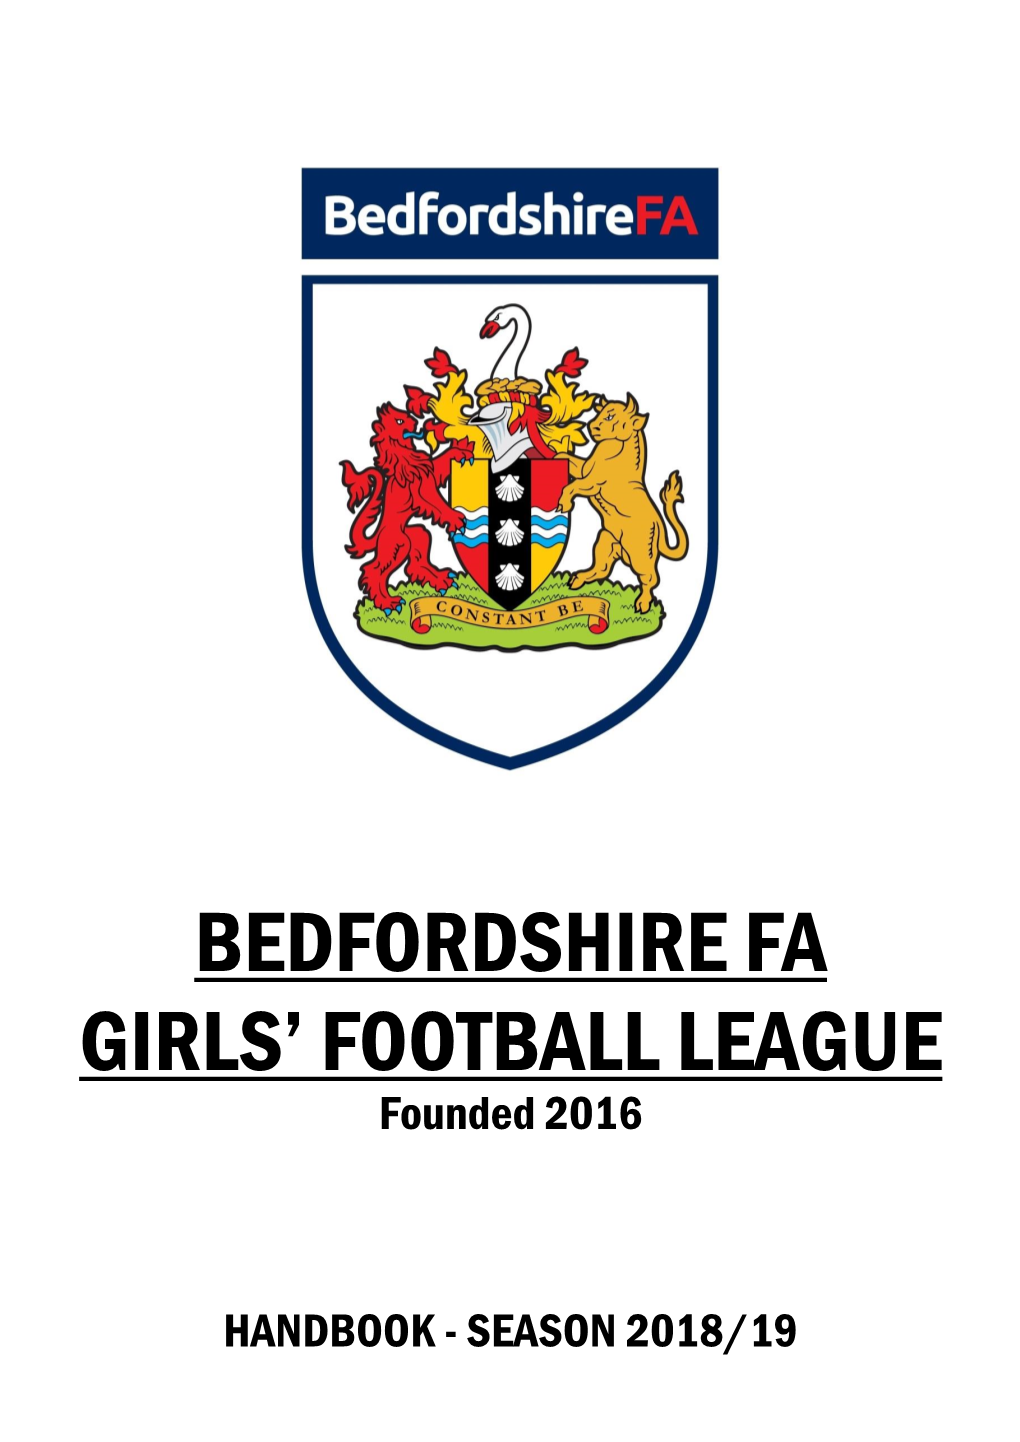 Bedfordshire Fa Girls' Football League